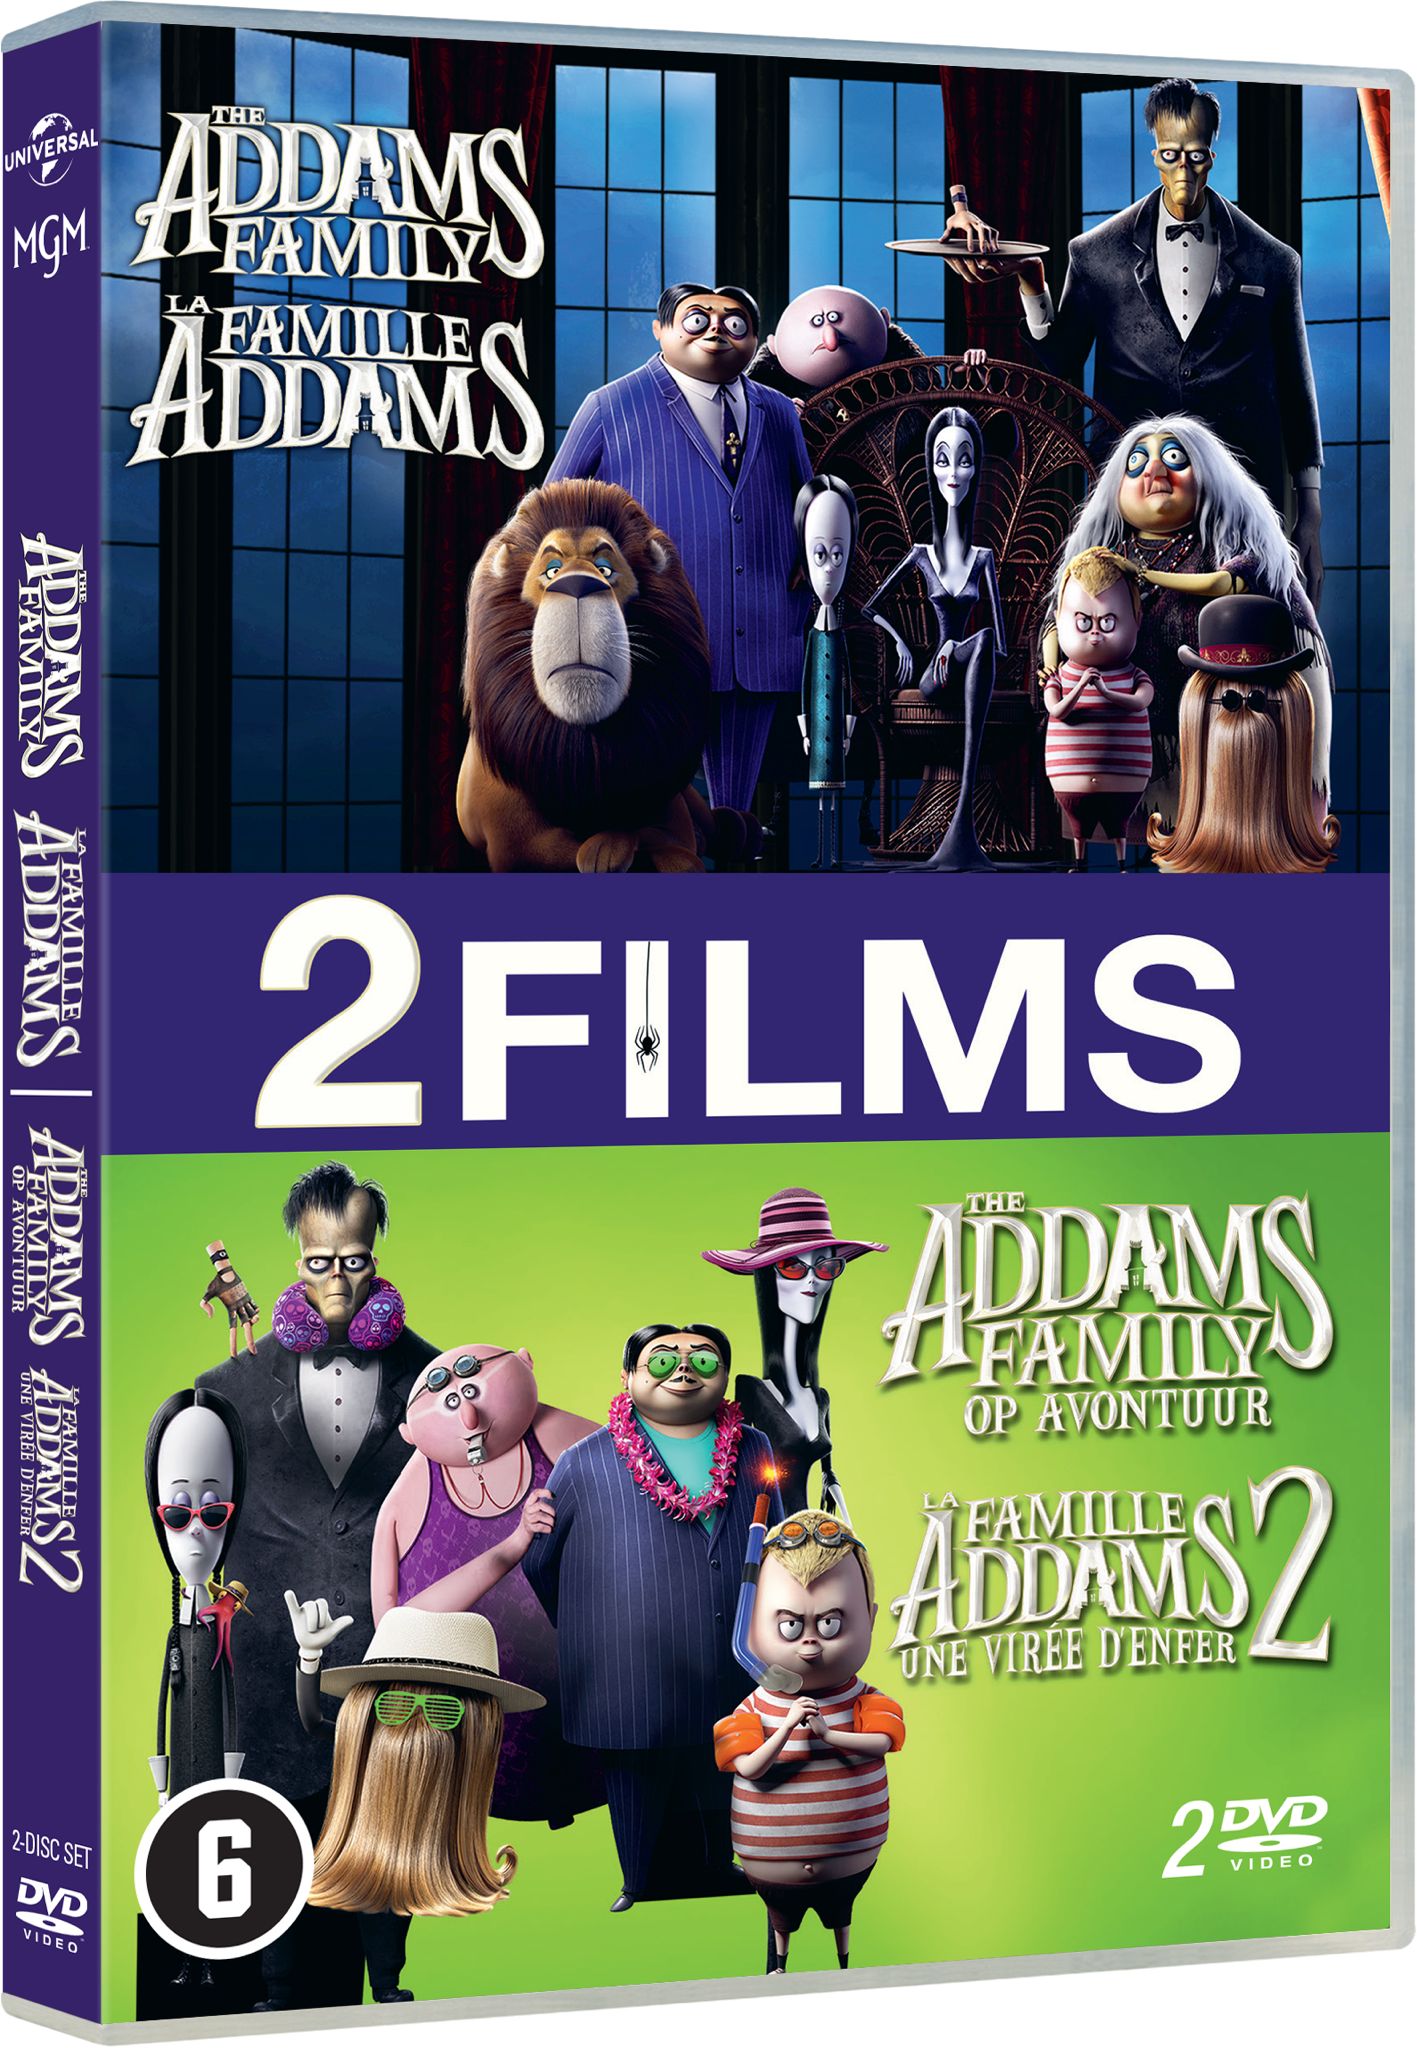 The Addams Family DVD box